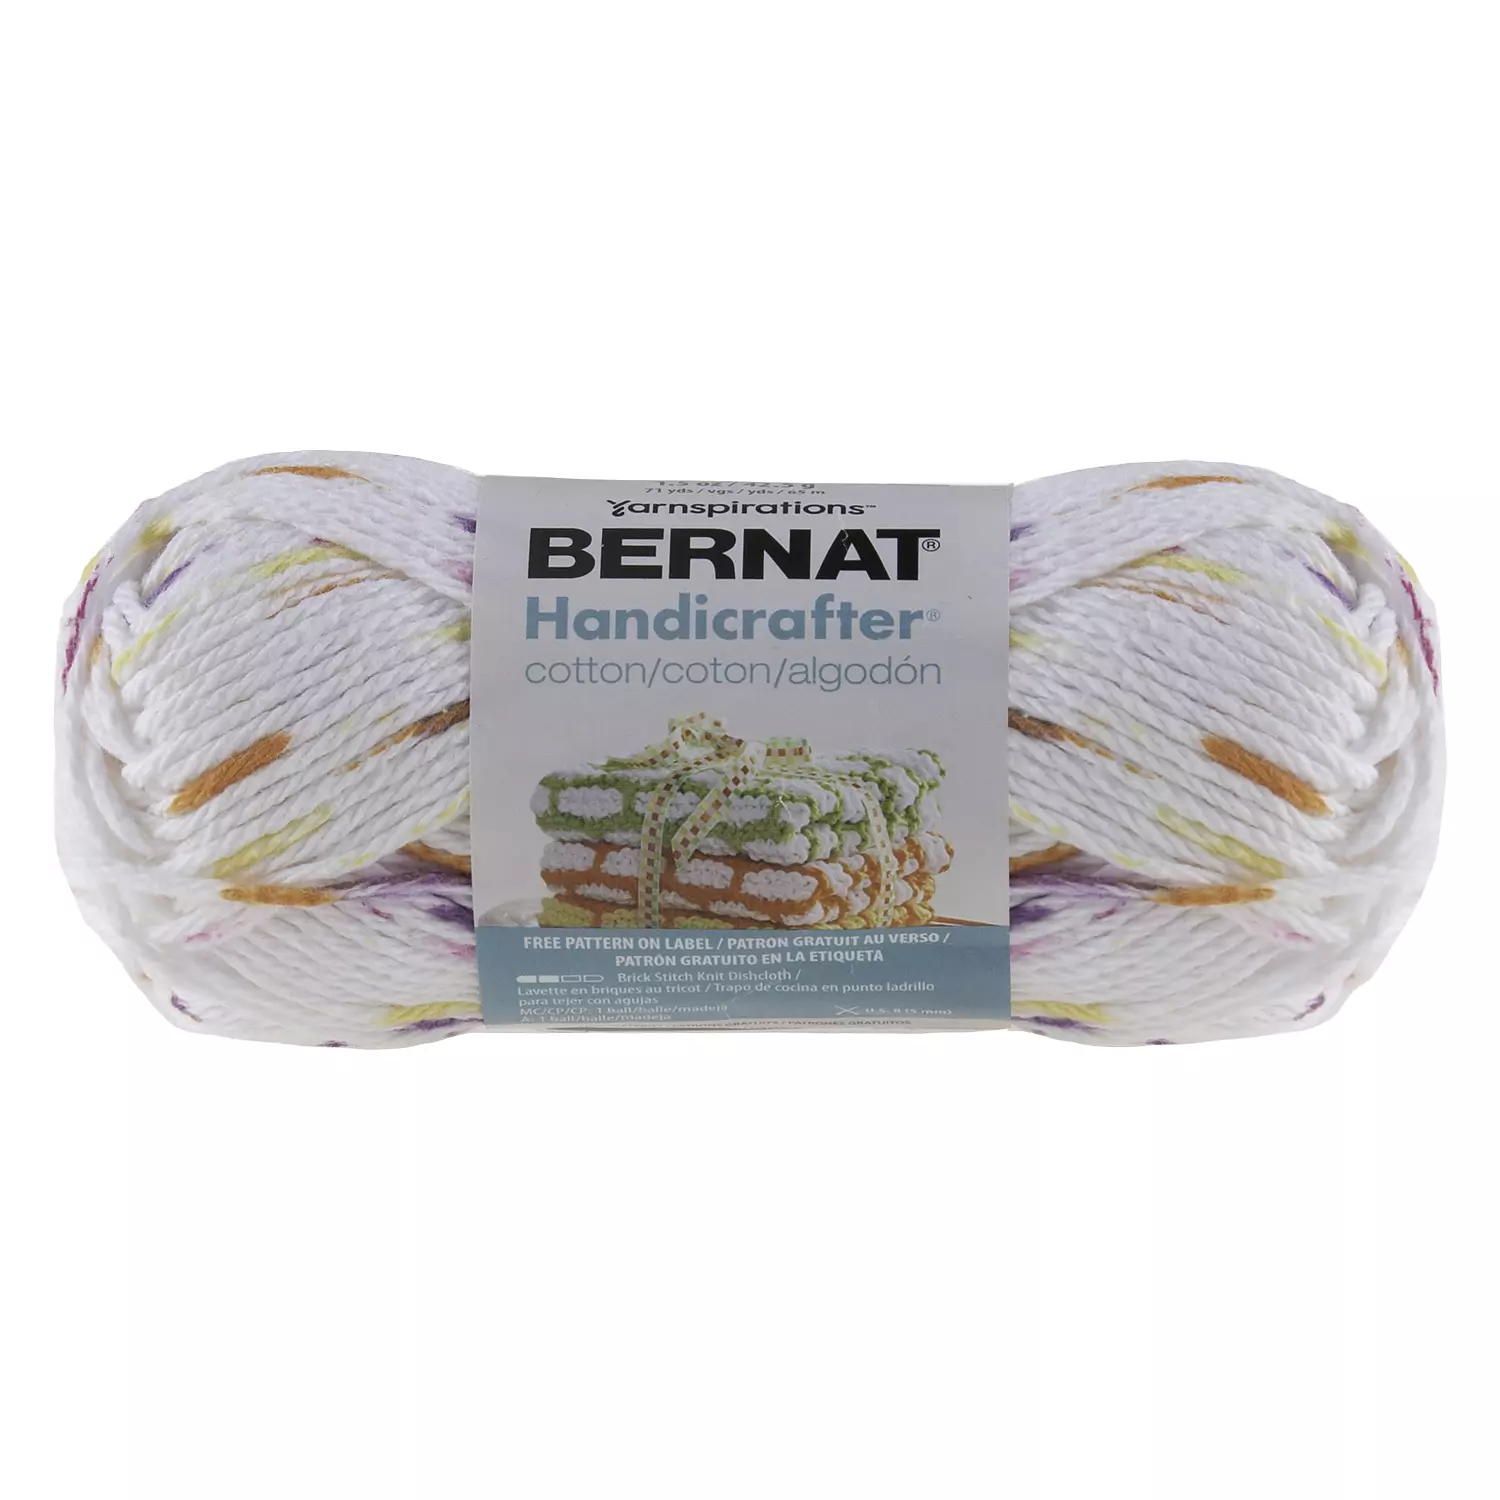 Bernat Handicrafter - Cotton yarn, floral prints